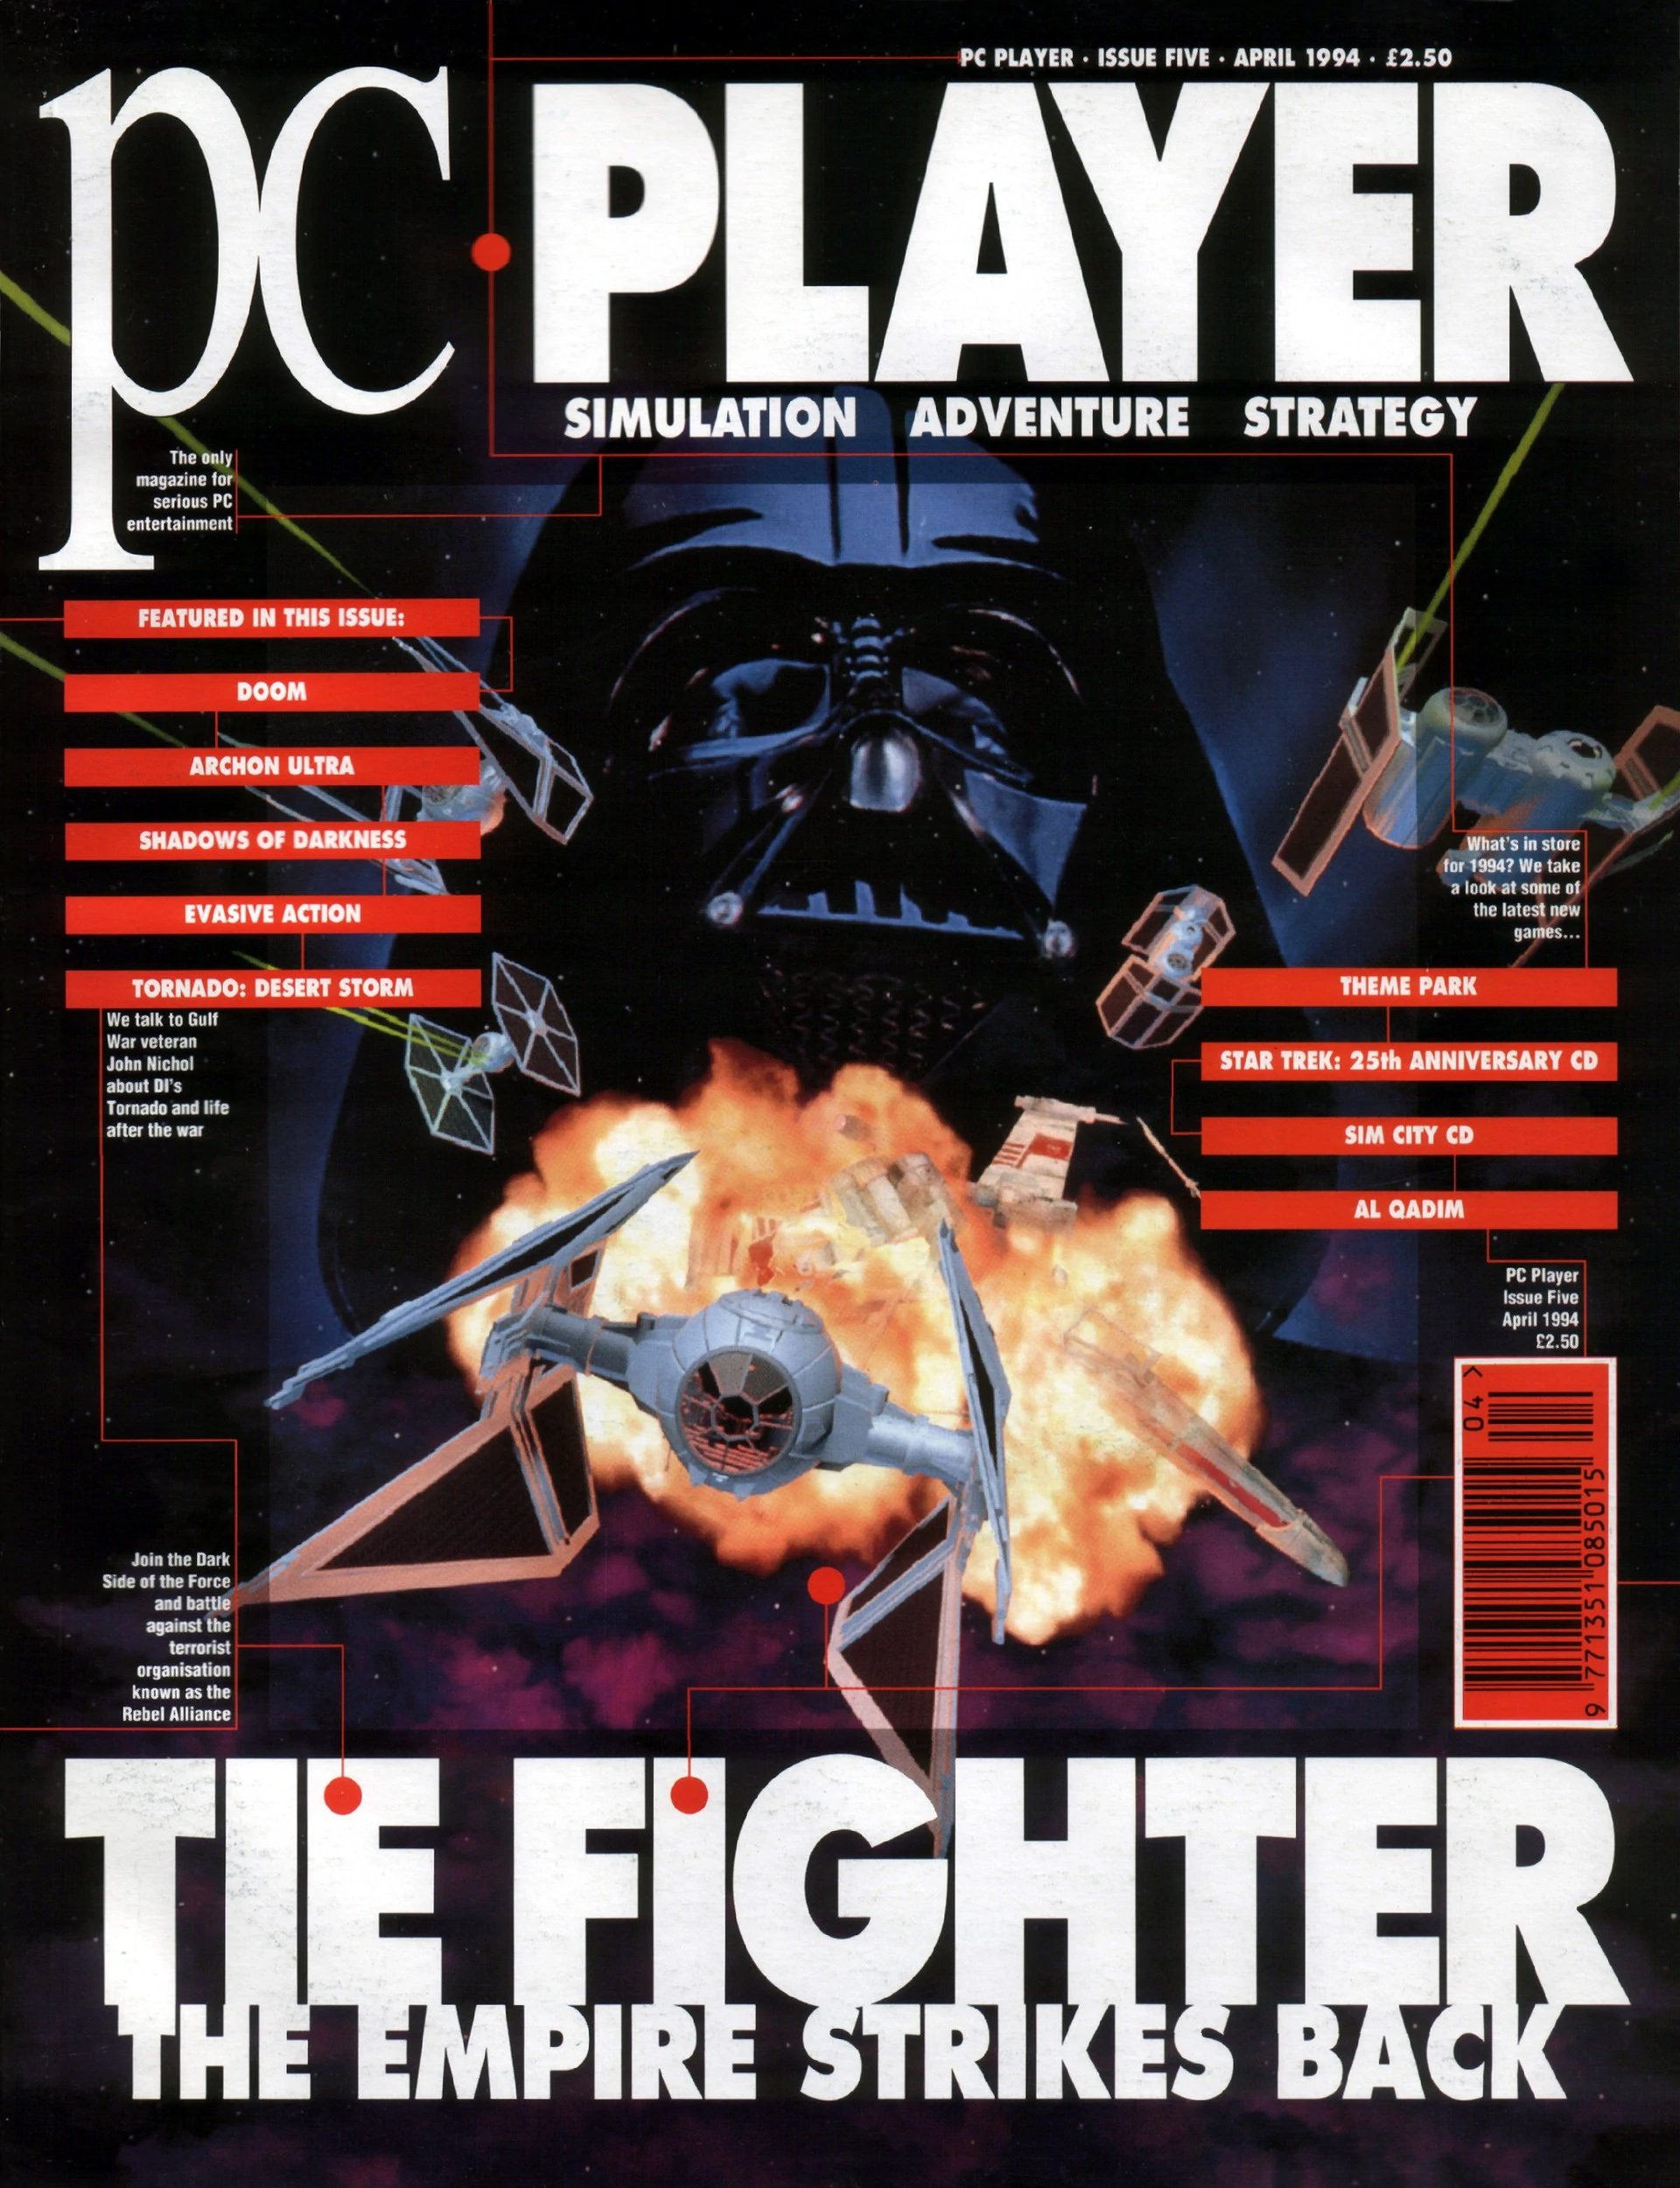 PC Player (Maverick Magazine) Issue 05 (April 1994)